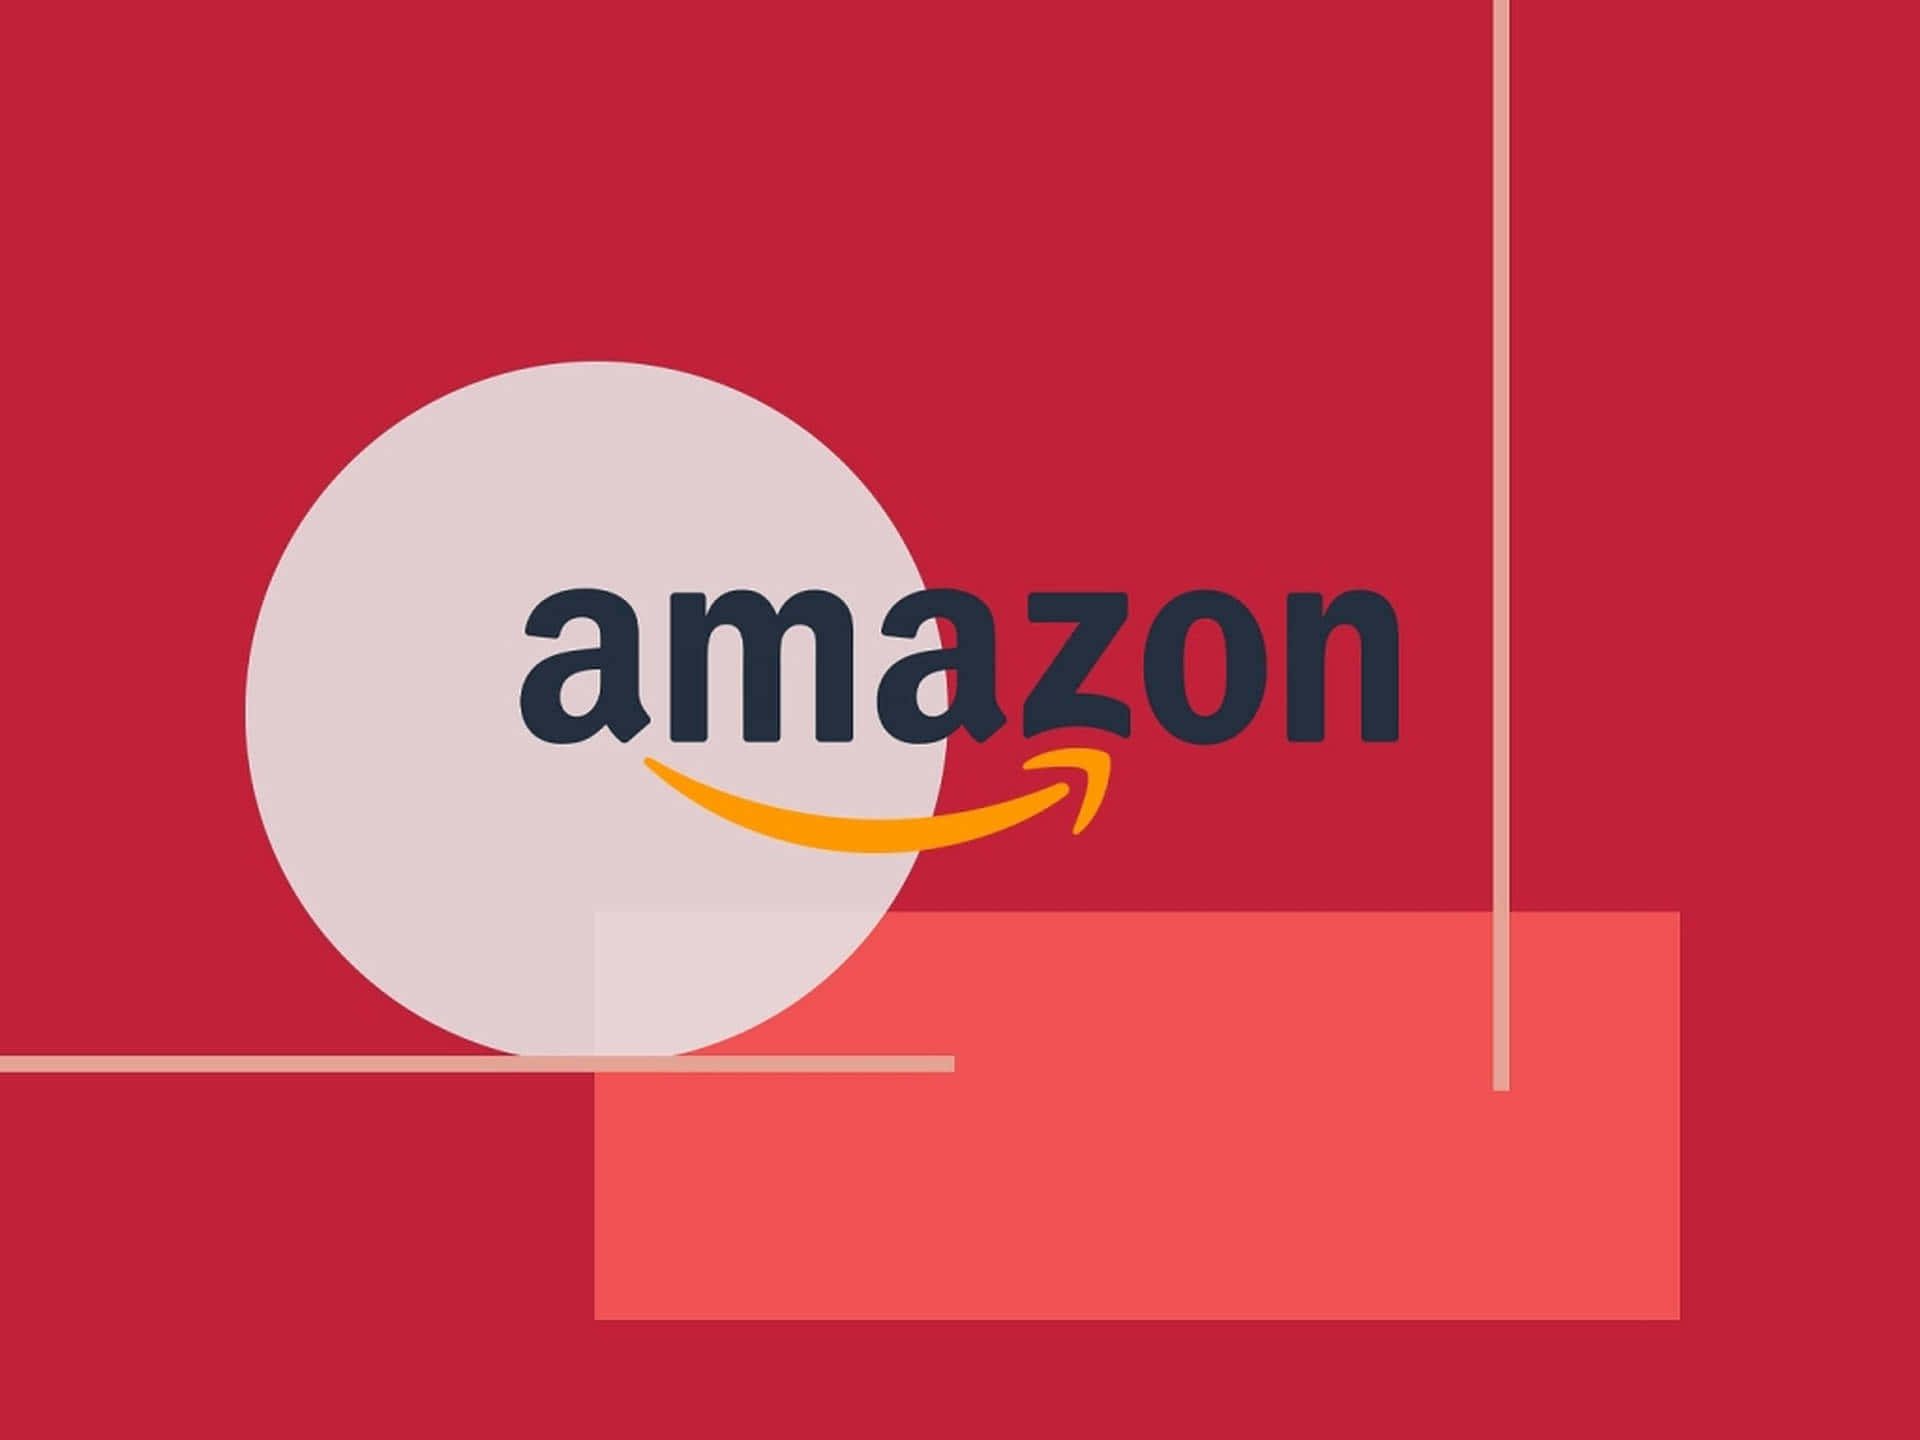 Amazon Uk Logo In Red Backdrop Wallpaper